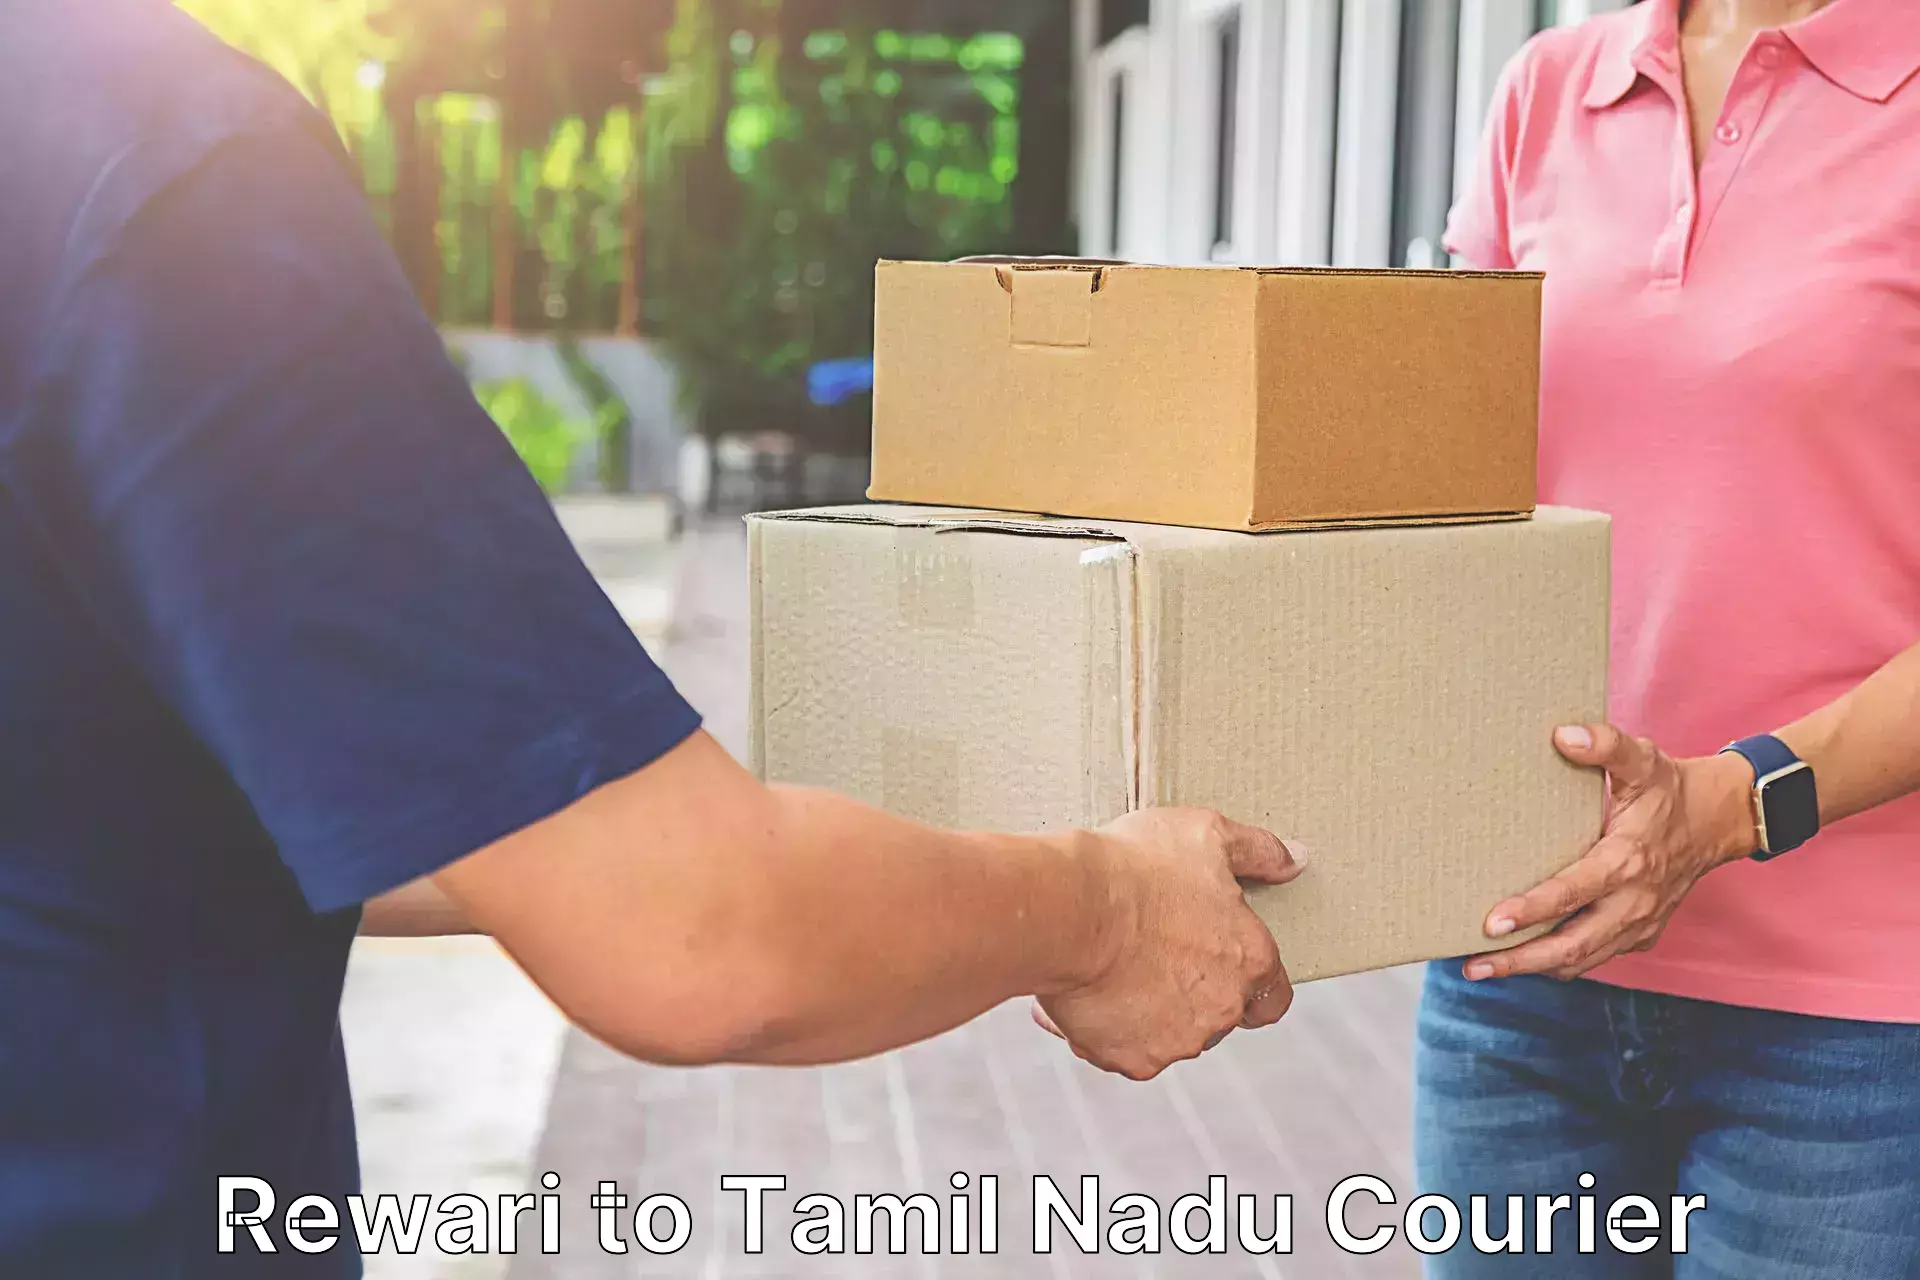 Cash on delivery service Rewari to Thiruthuraipoondi